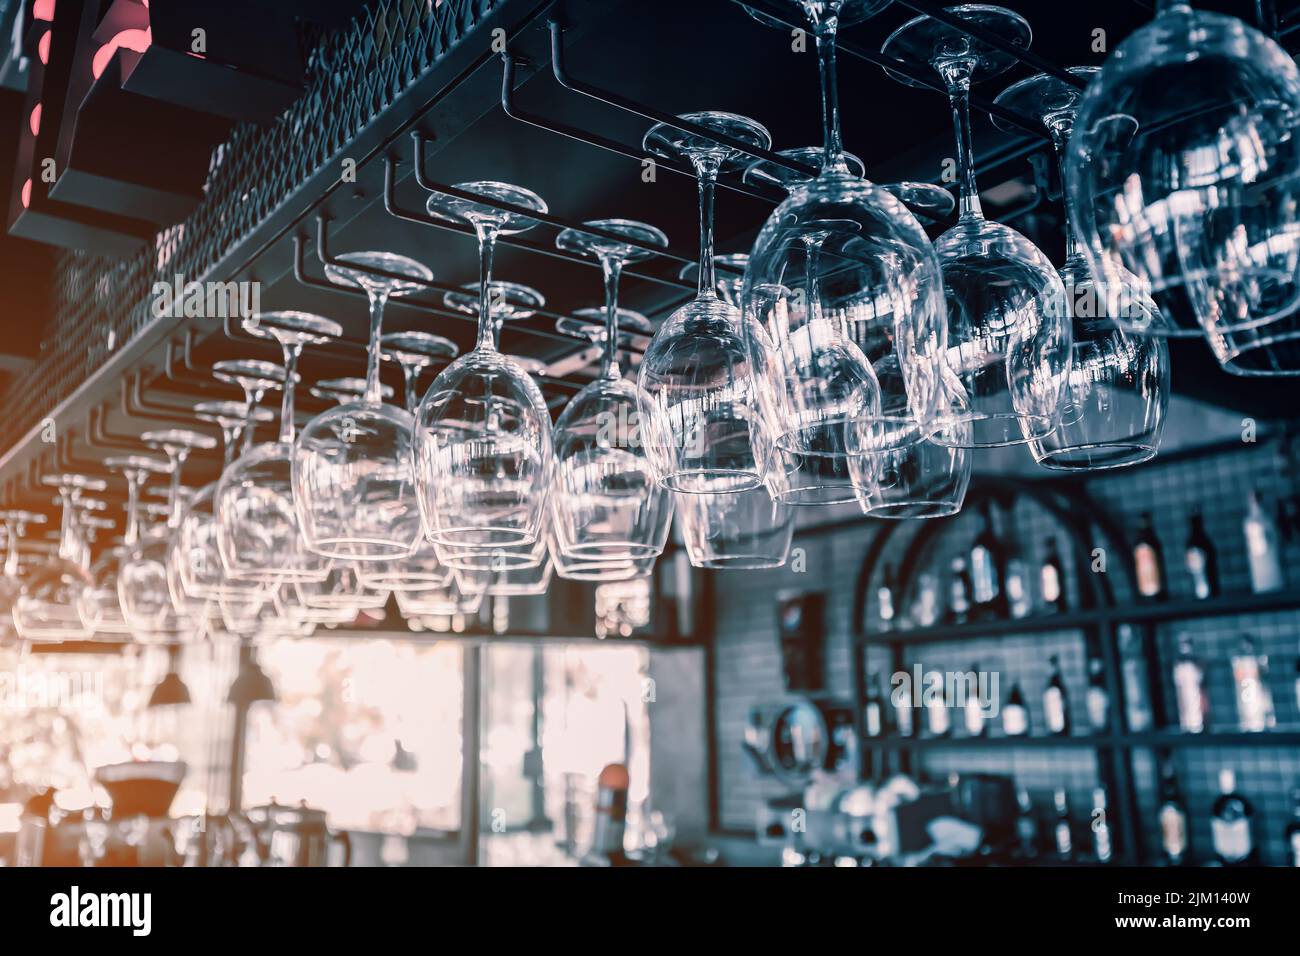 Copas de vino colgando y secando en bar de discoteca o restaurante con interior oscuro. Concepto de cóctel de alcohol Foto de stock